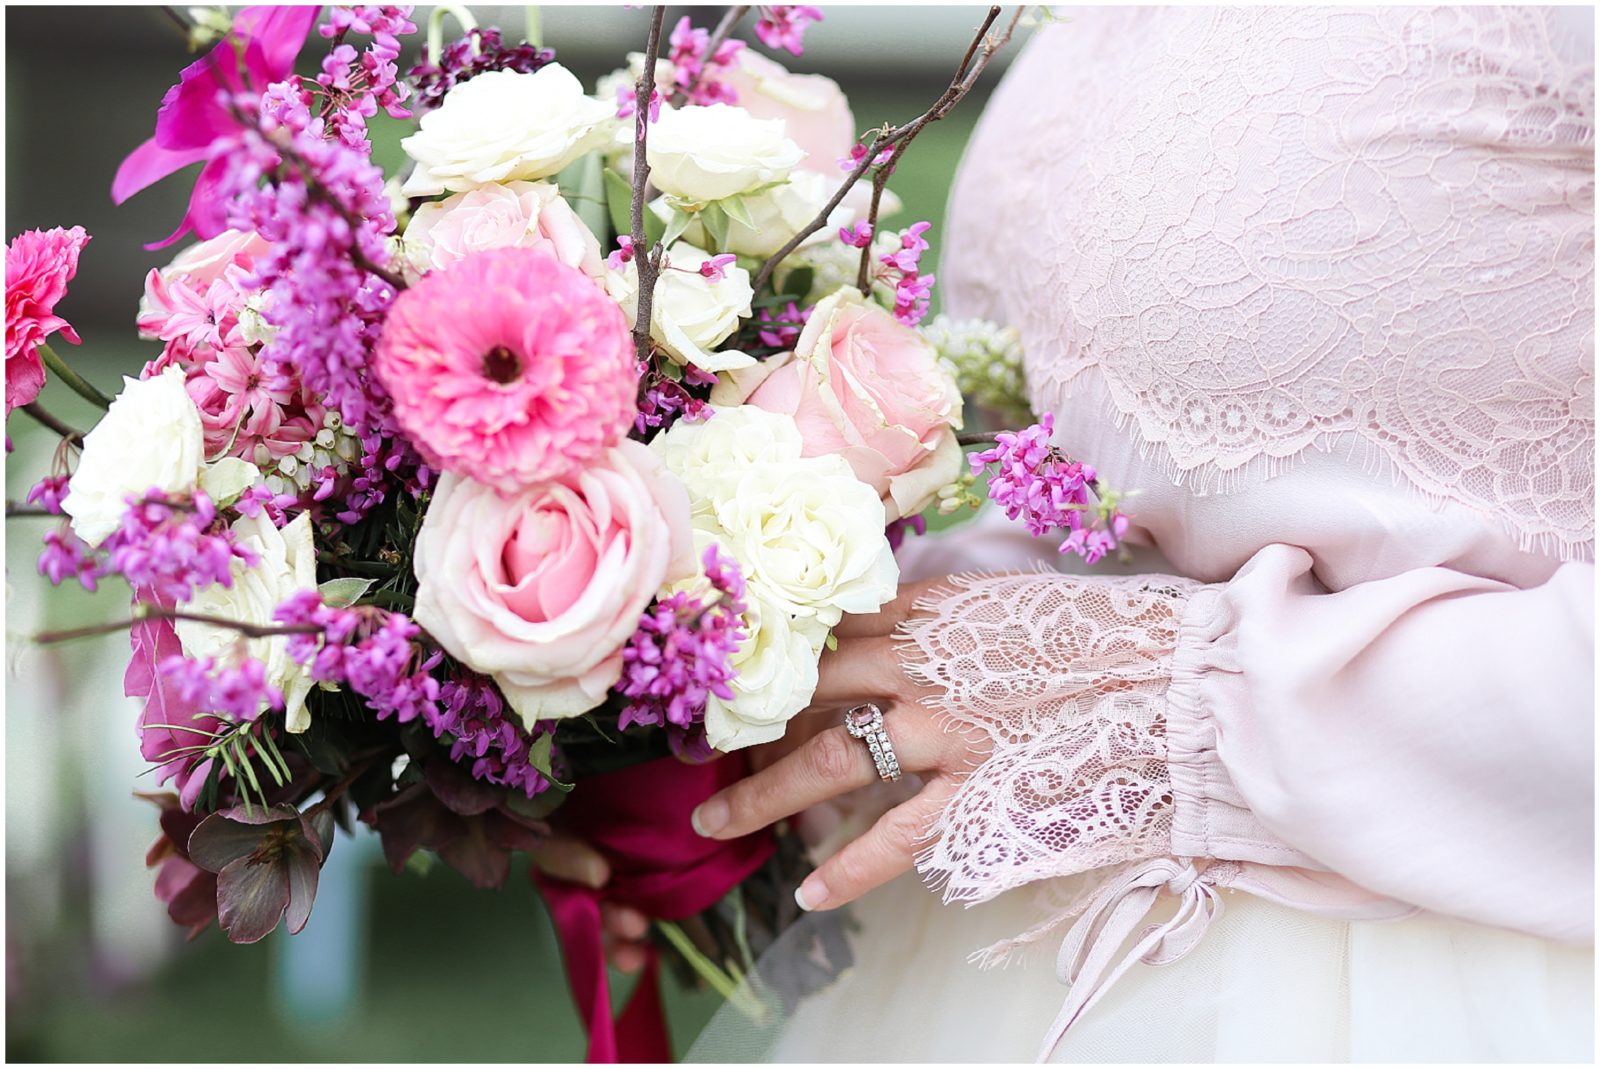 pink lace wedding dress with gorgeous pink white romantic wedding bouquet - wedding ring - muslim bride - kansas city wedding vendors 